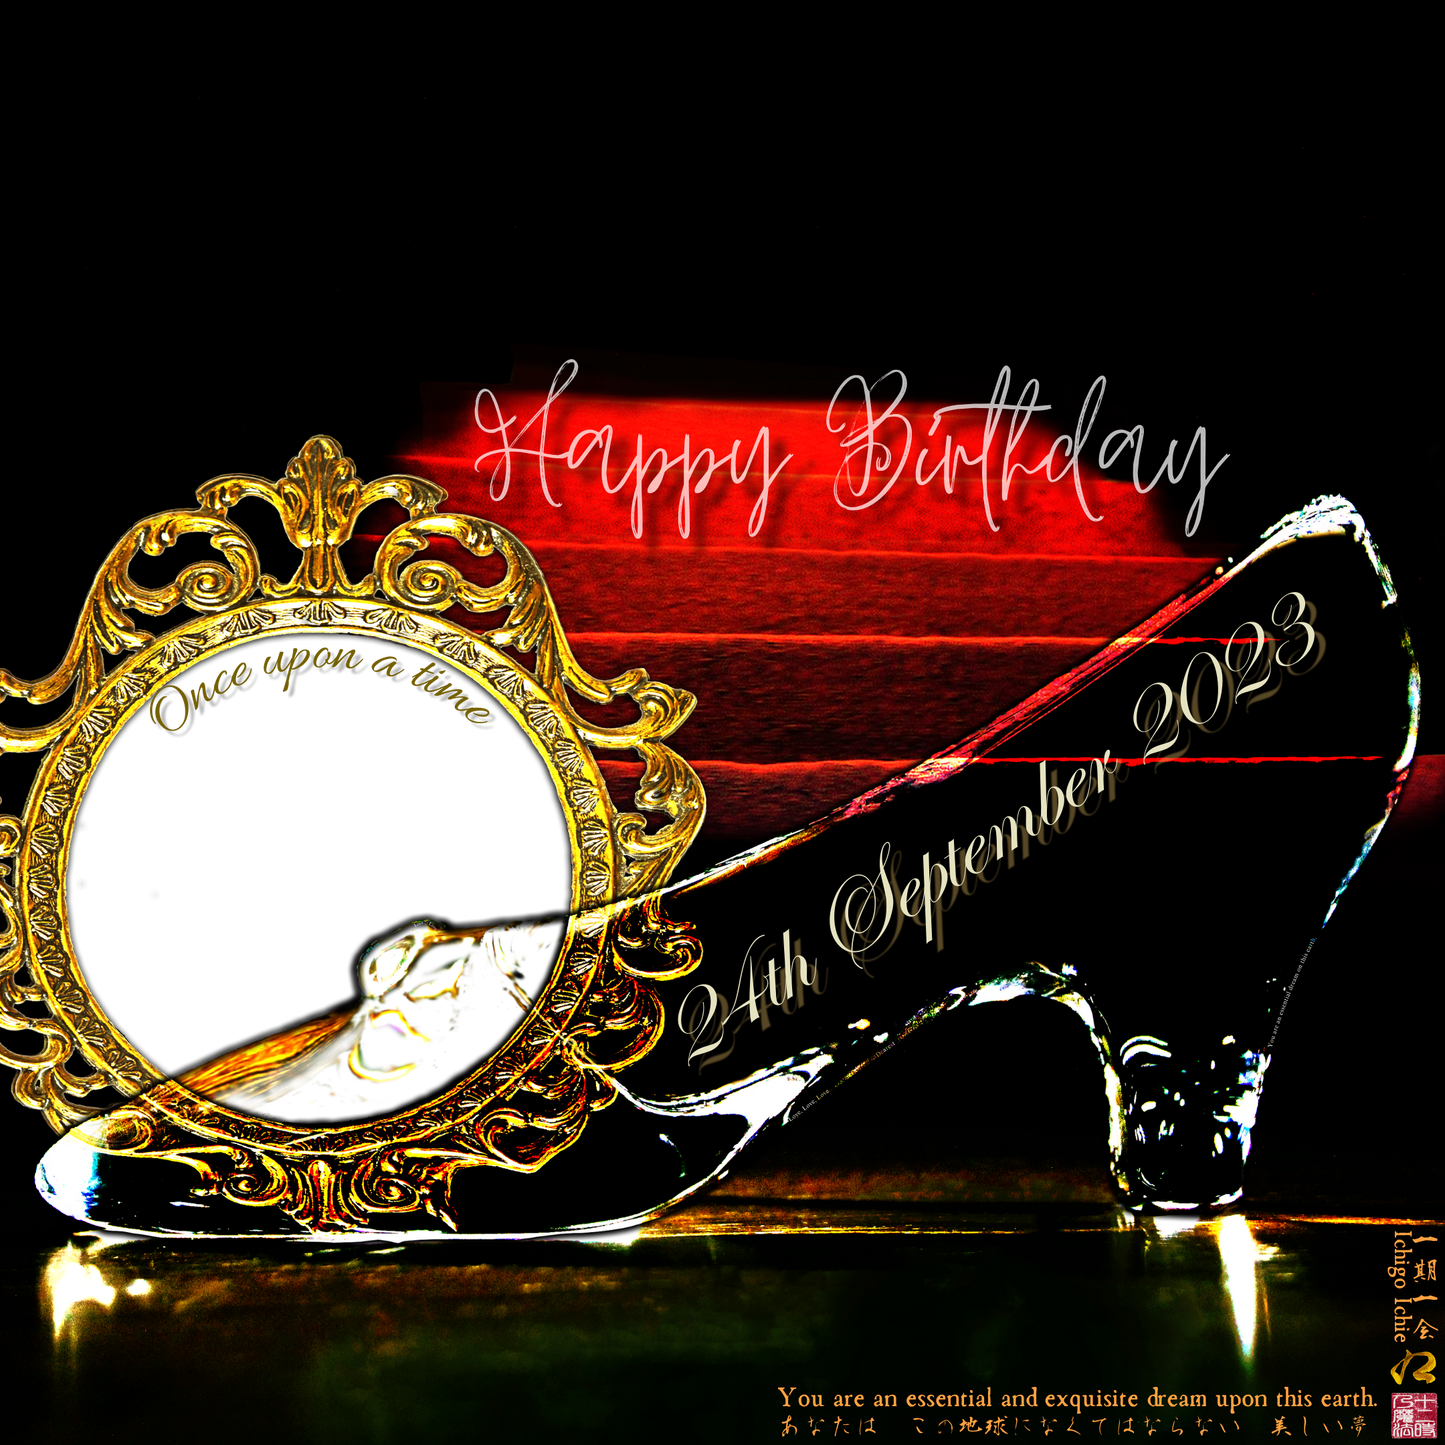 Happy Birthday Glass Slipper "Ichigo Ichie" 24th September 2023 the Left (1-of-1) NFT Art